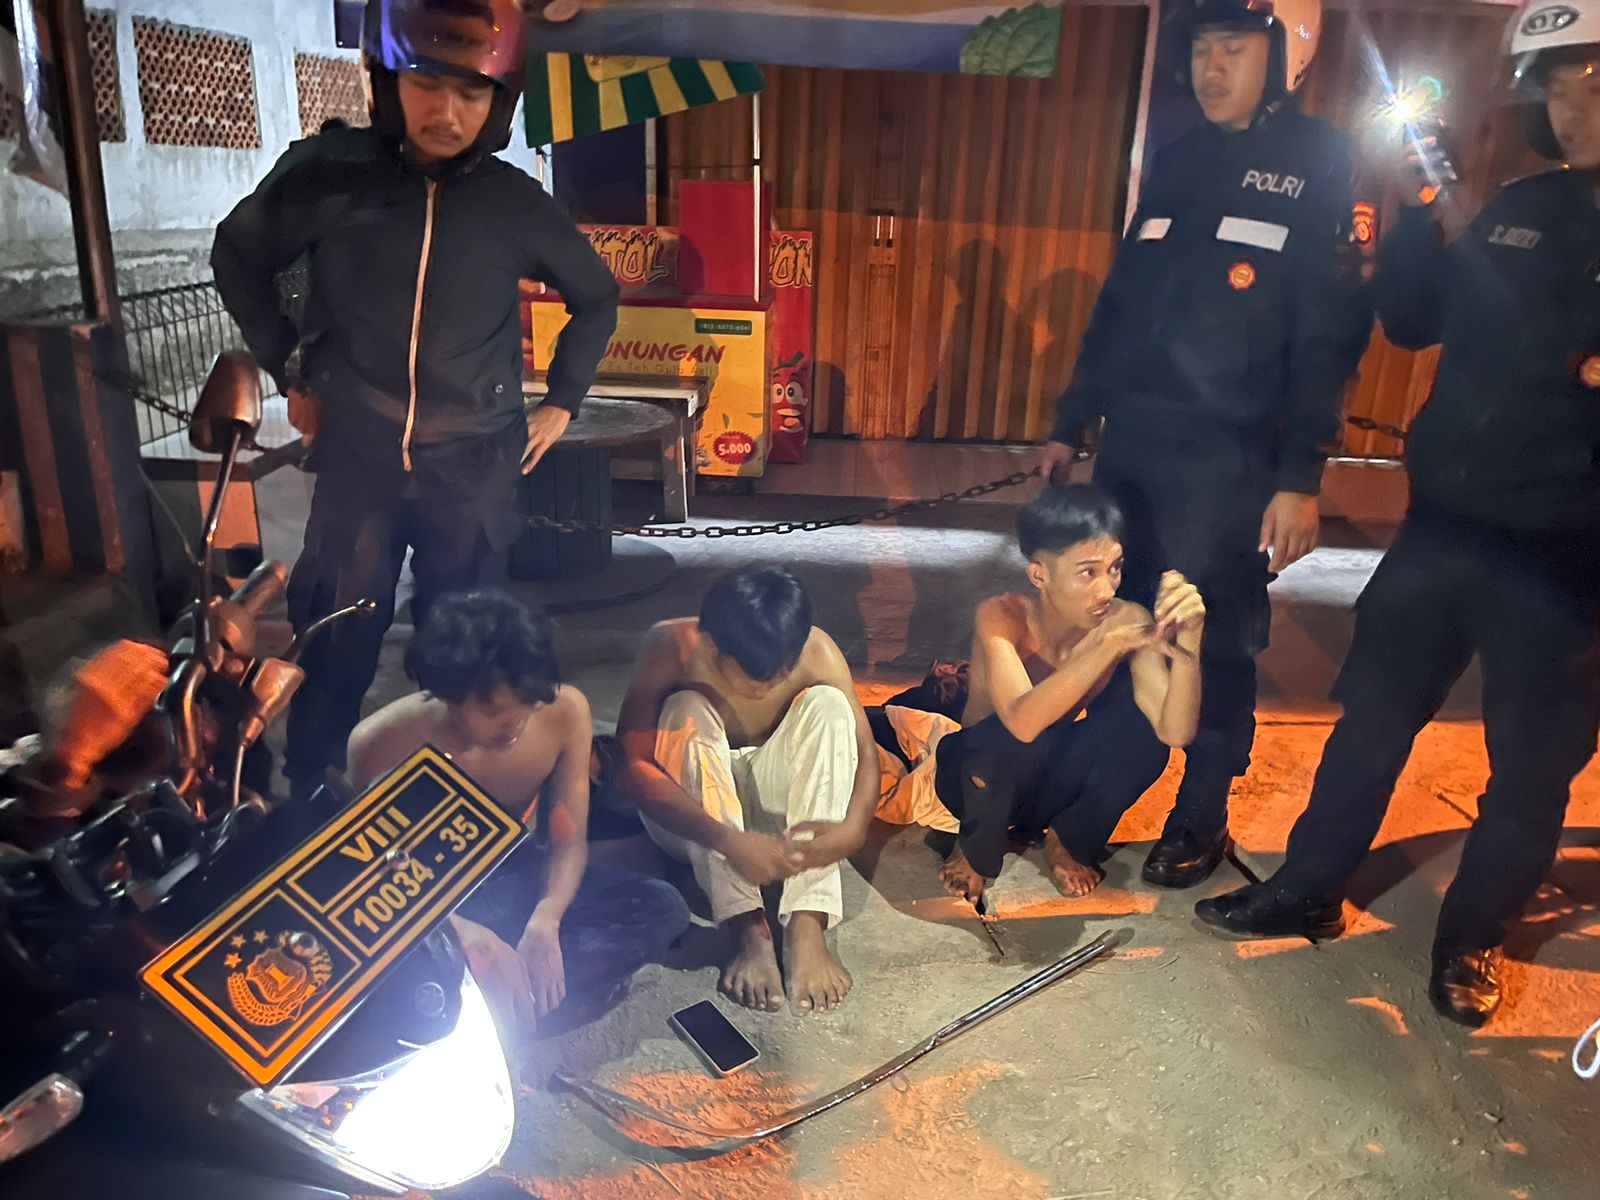 Anggota Sat Samapta Polres Karawang Berhasil Menggagalkan Aksi Tawuran Remaja Di Tugu Tani Karawang Pada Malam Hari